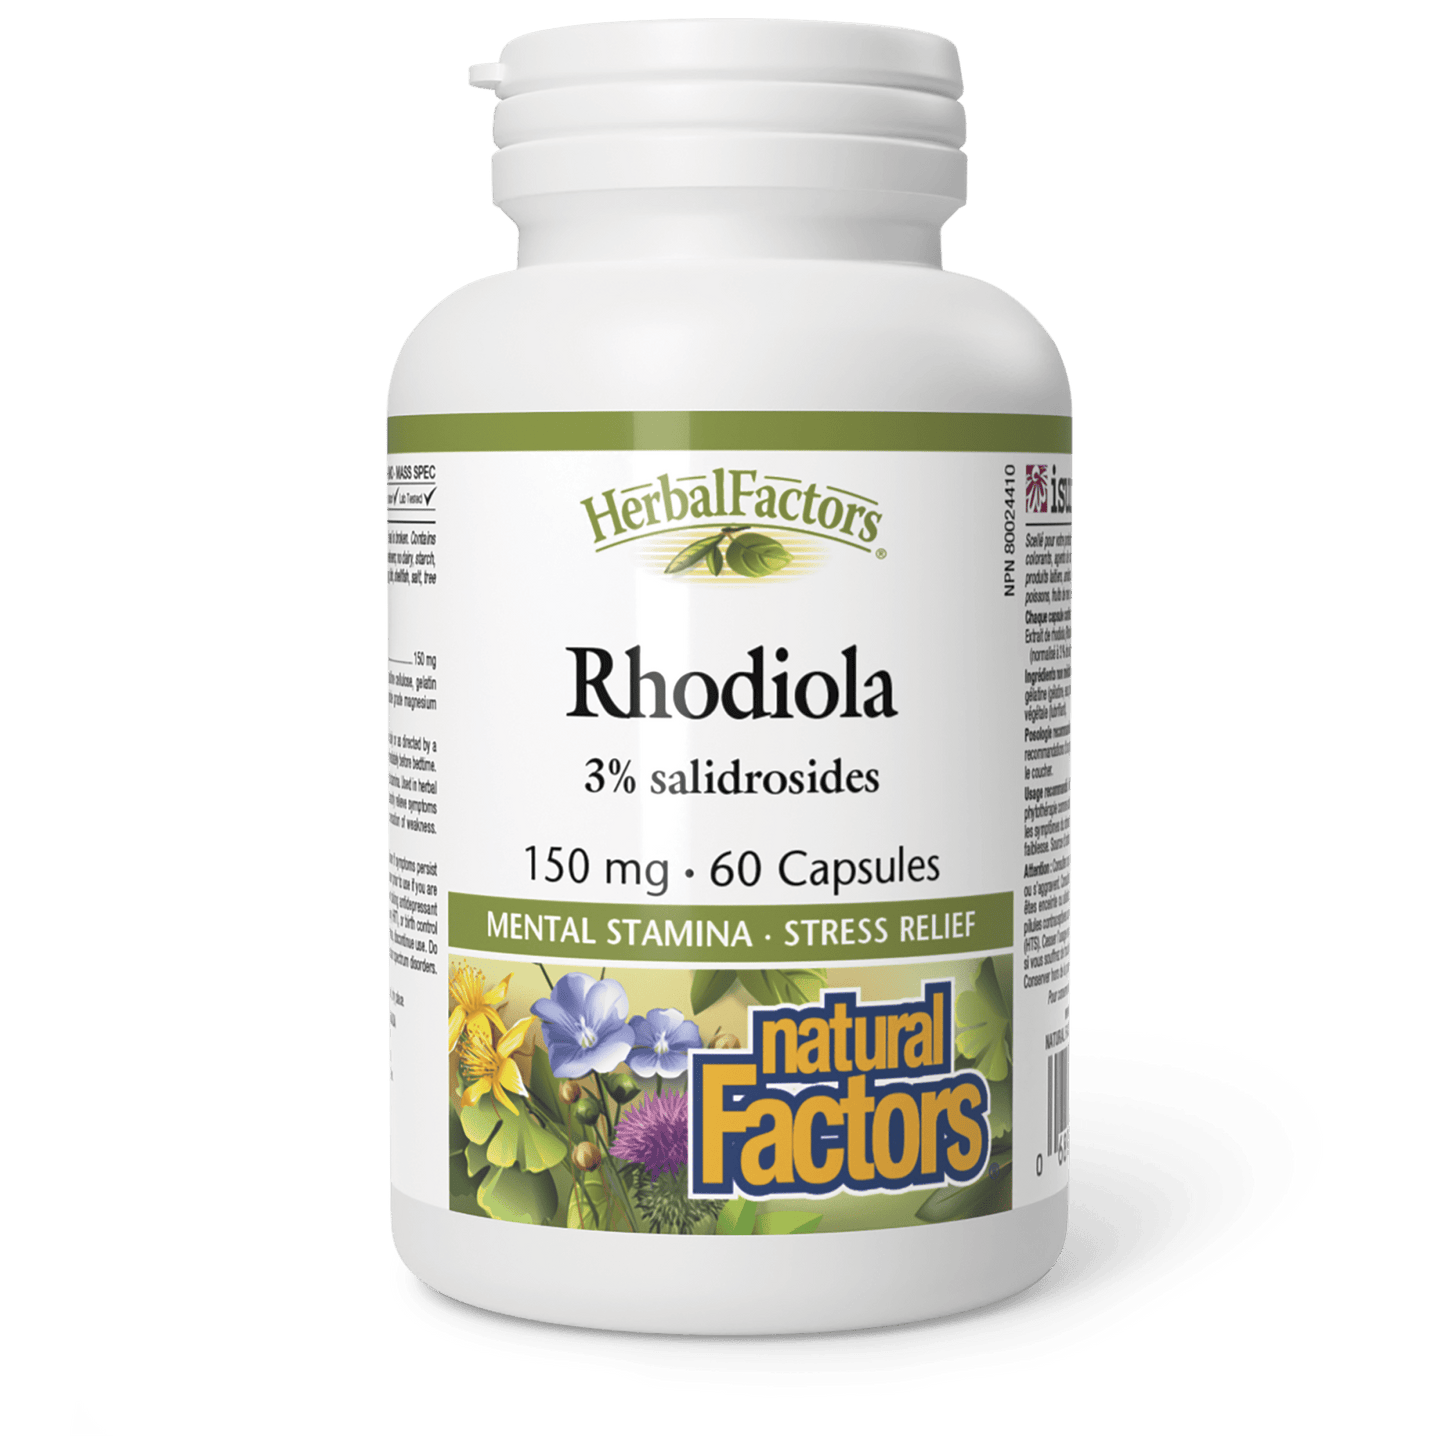 Rhodiola 150 mg, HerbalFactors, Natural Factors|v|image|4832